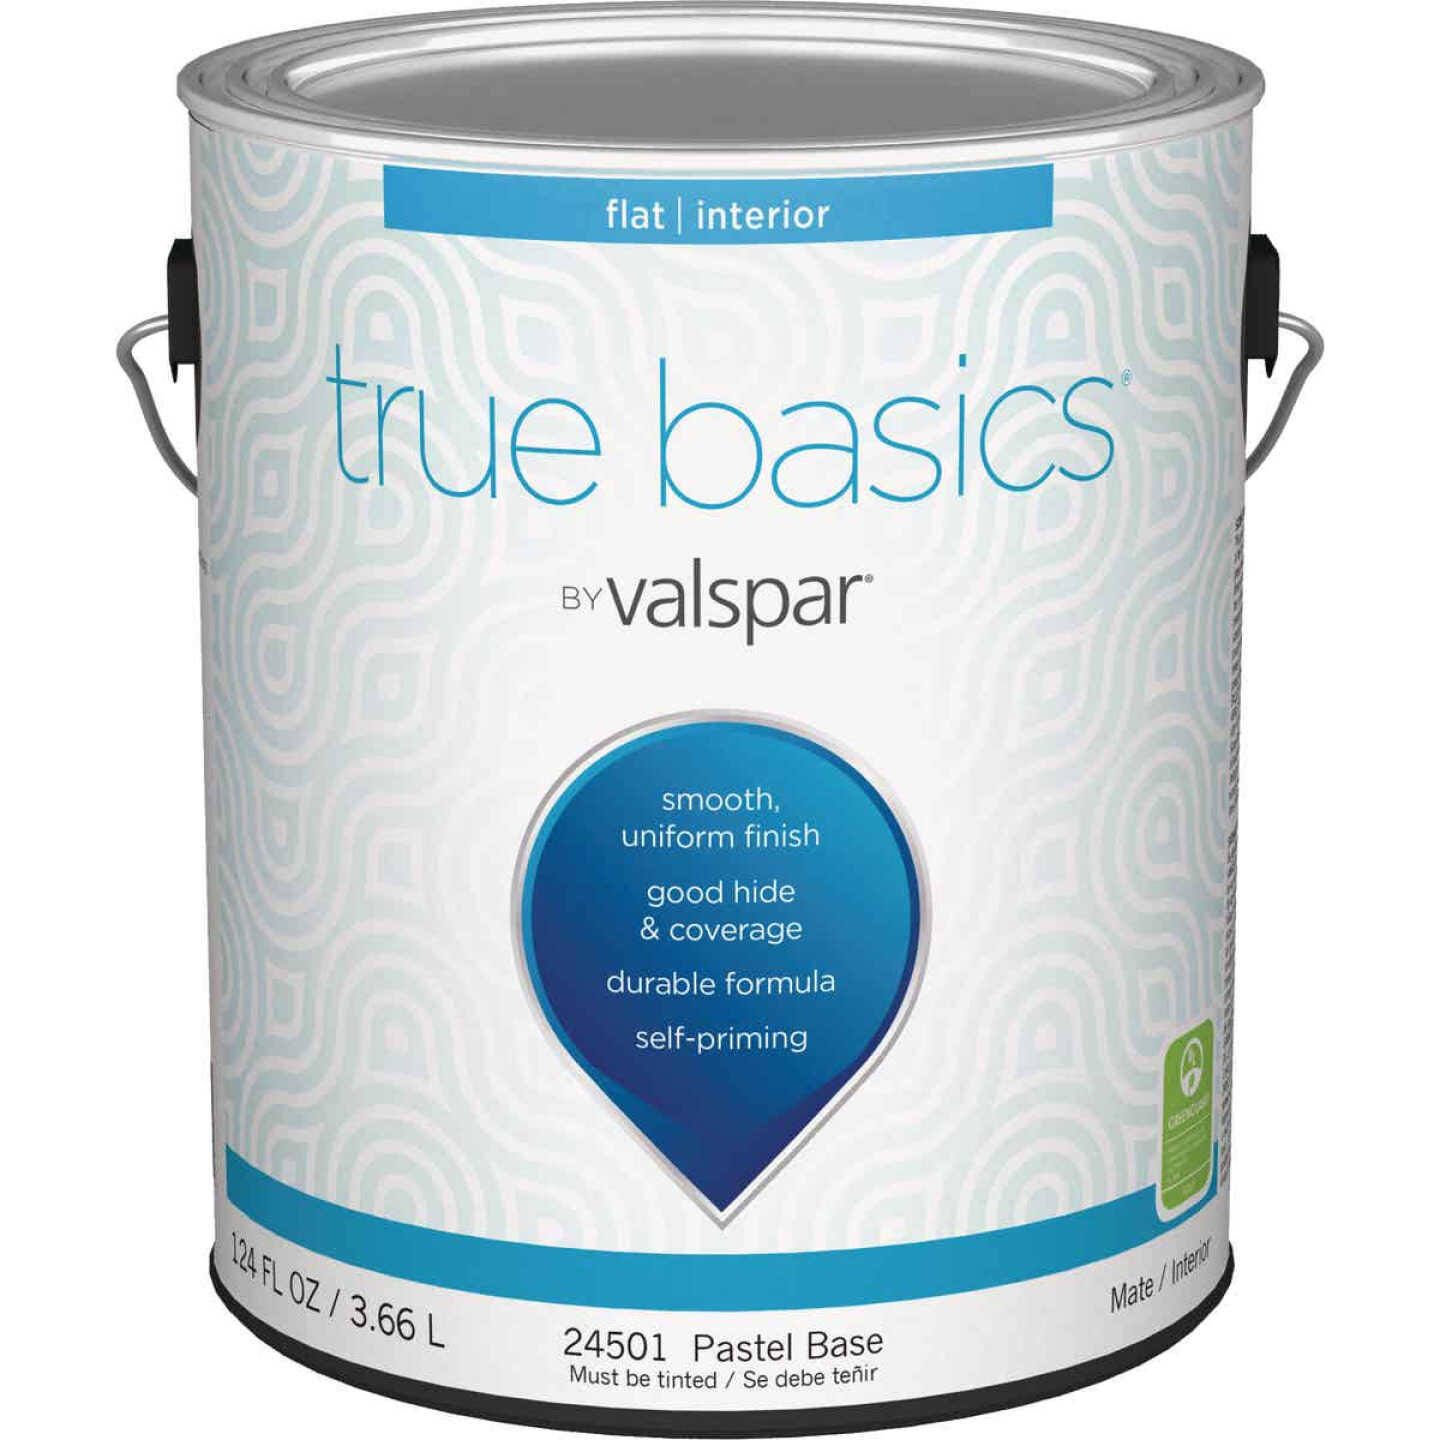 Valspar 7350721 1 Gal Flat Interior Paint - Pastel Base